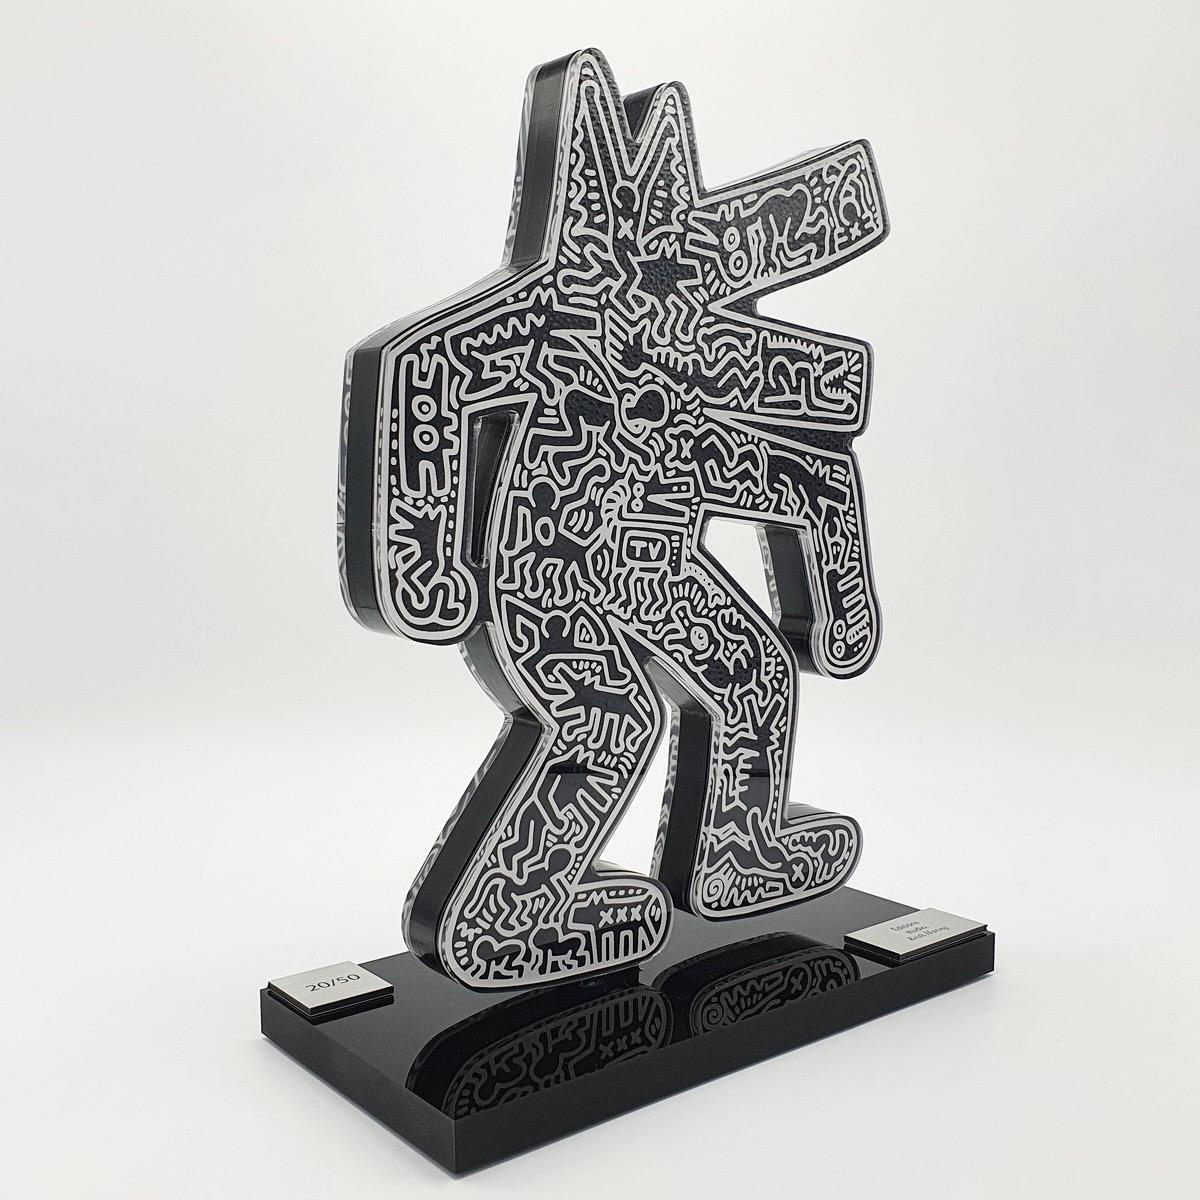 Barking Dog, artiste contemporain Keith Haring.